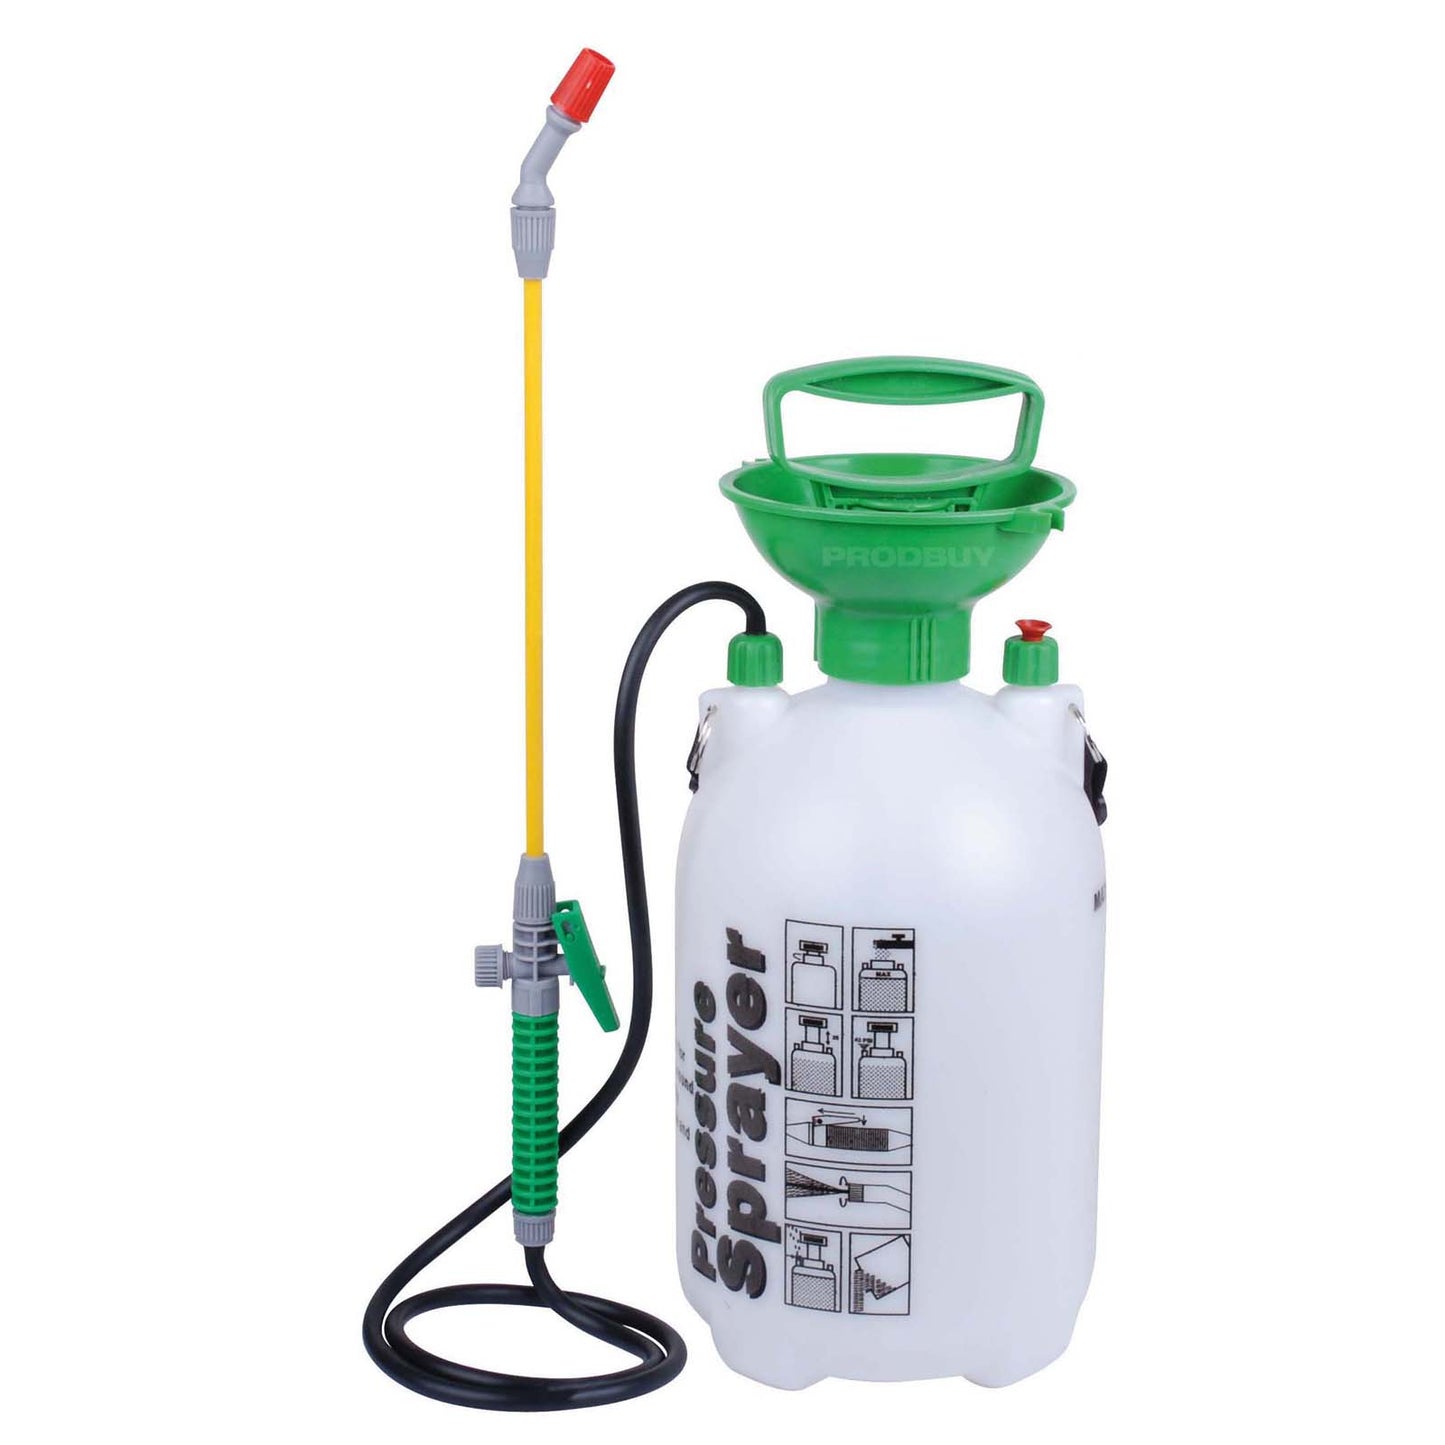 5 Litre Pump Action Pressure Sprayer